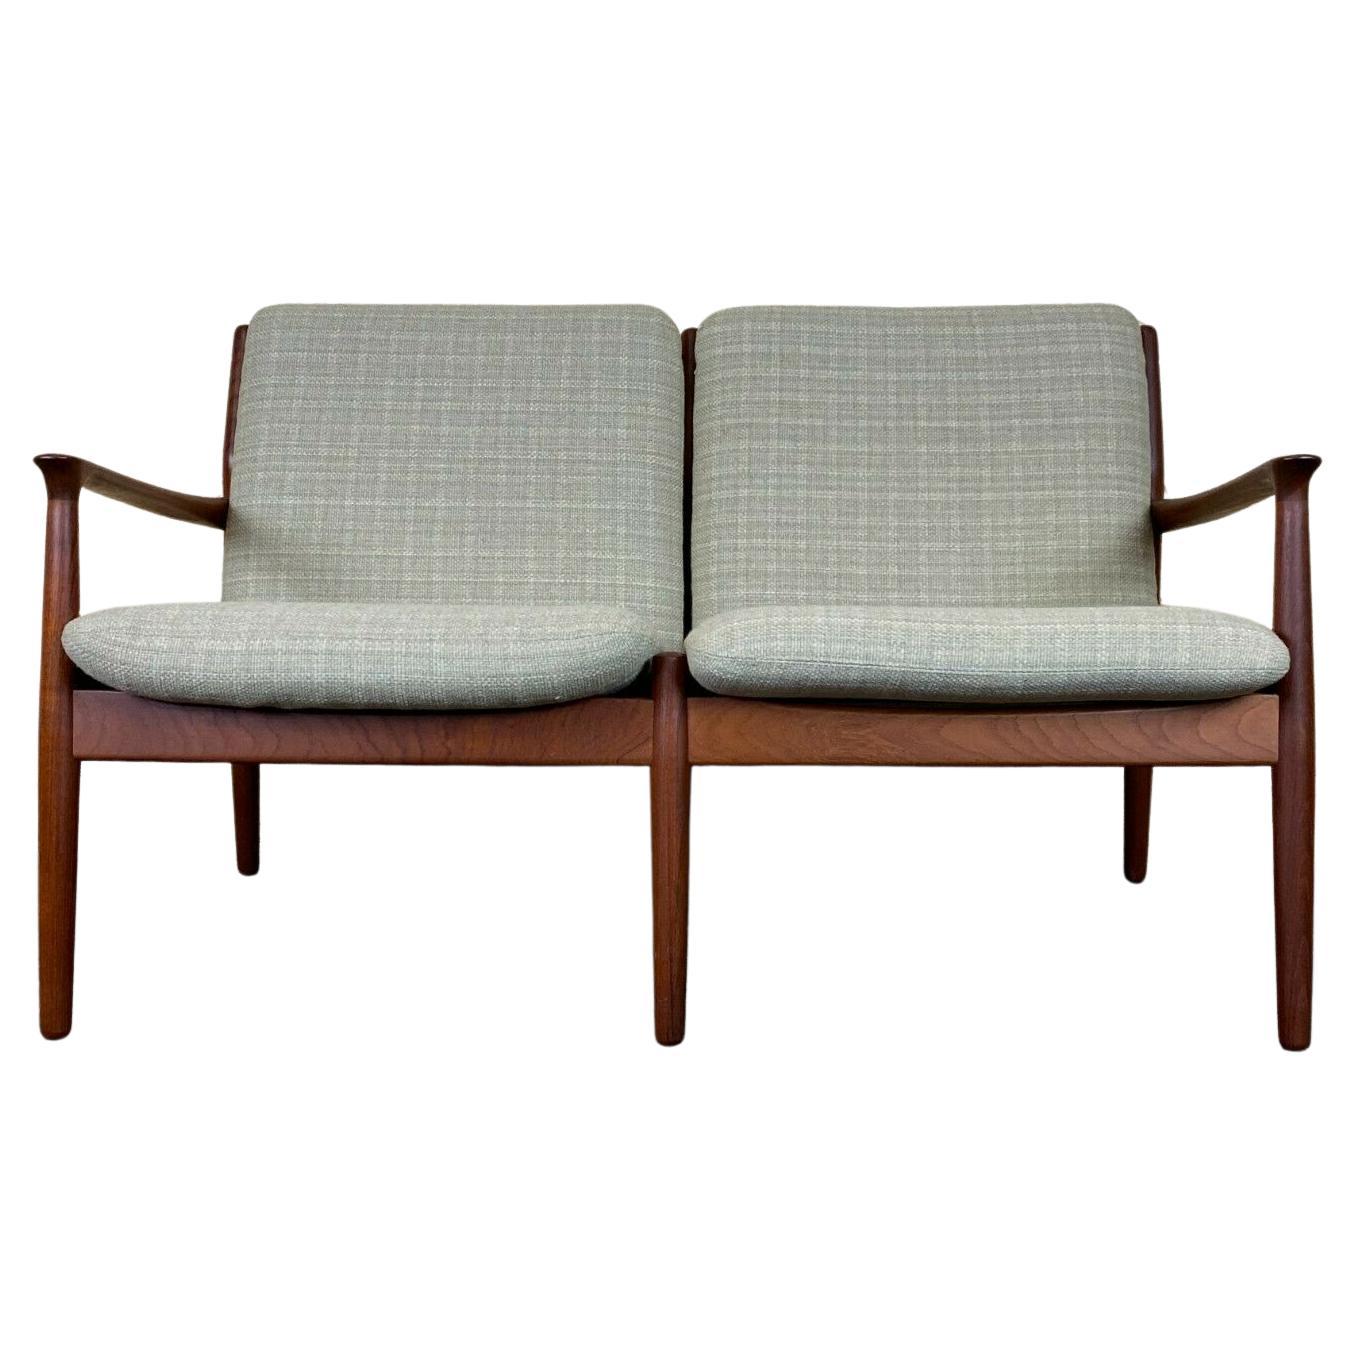 60s 70s Teak Sofa Couch 2er Svend Aage Eriksen for Glostrup Danish Design For Sale